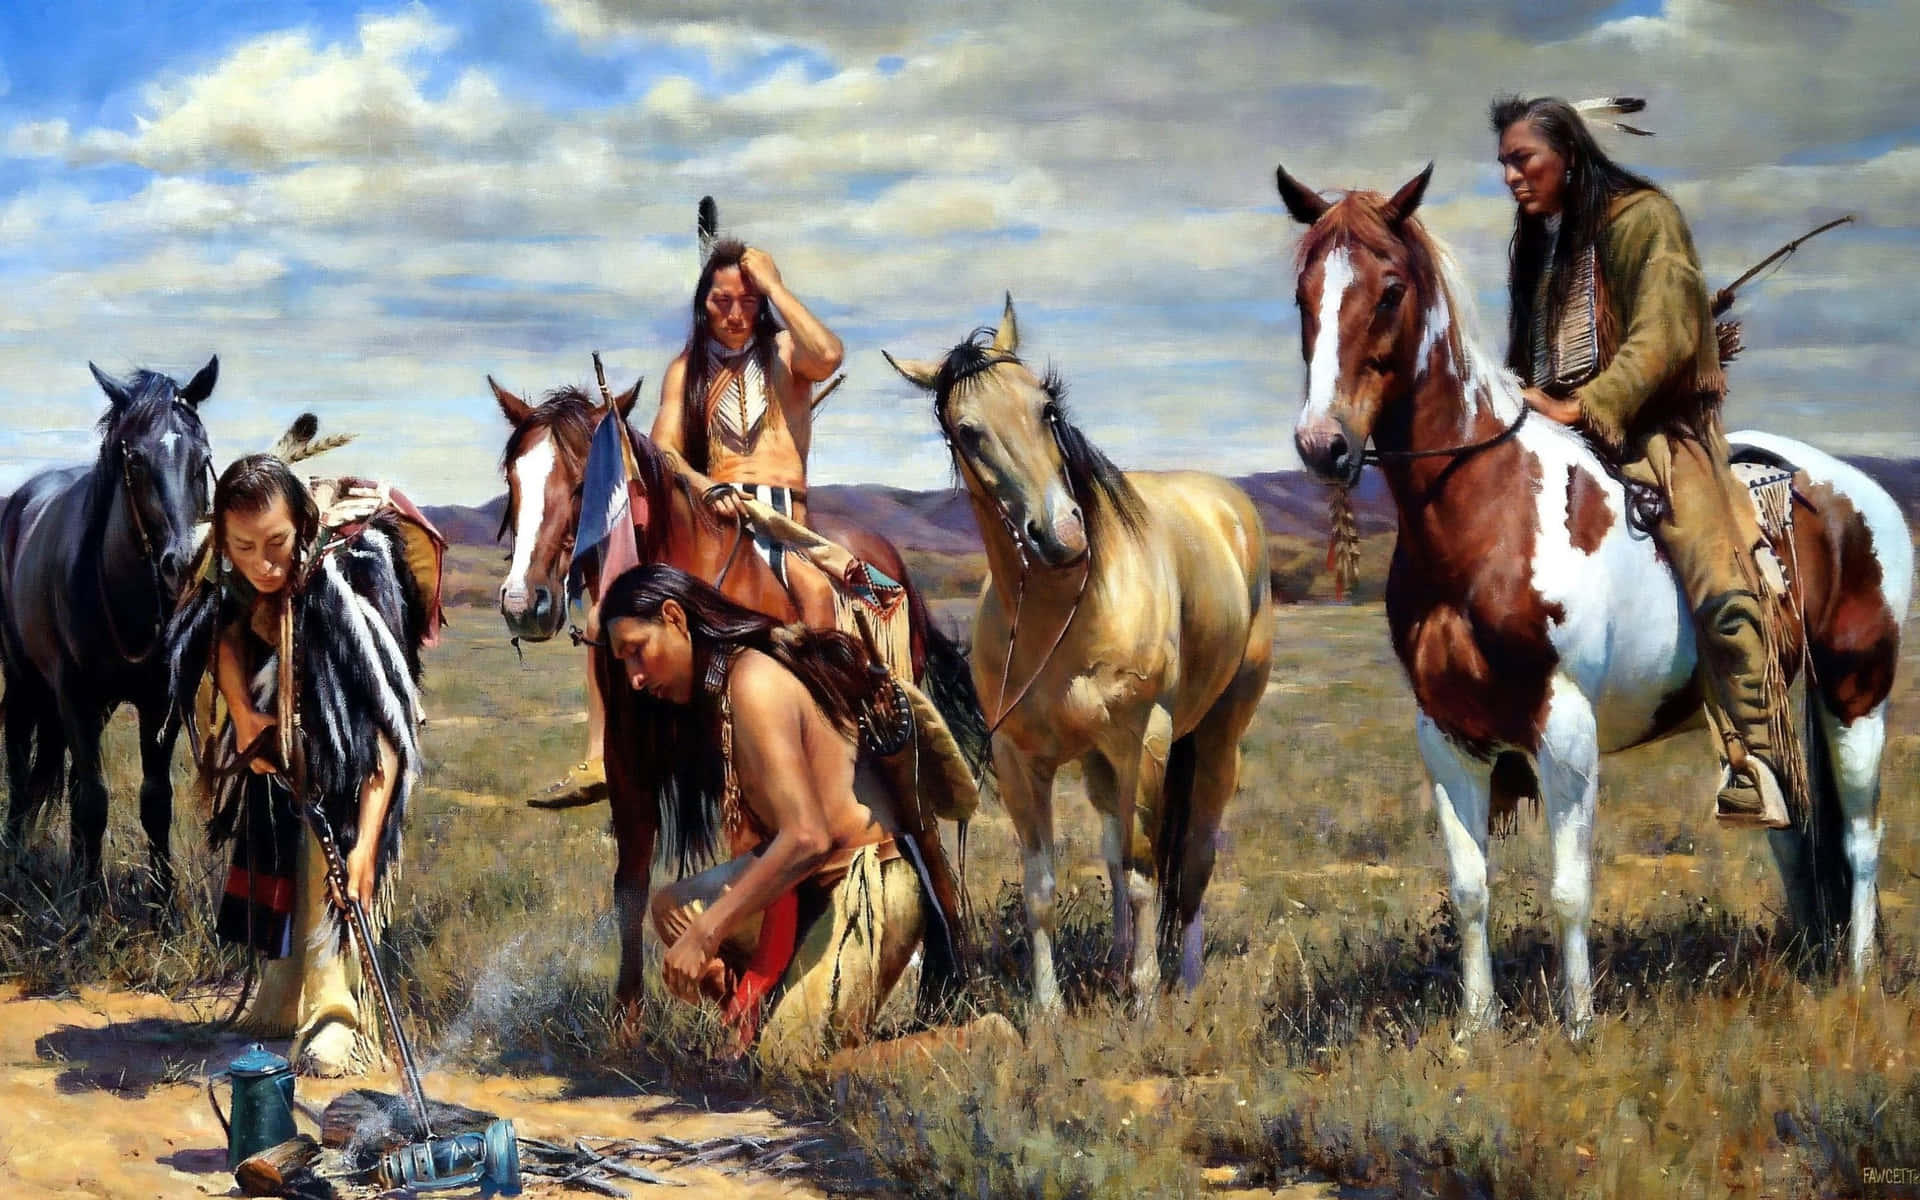 Native americanere på heste galoperende over en stjerneklar himmel. Wallpaper